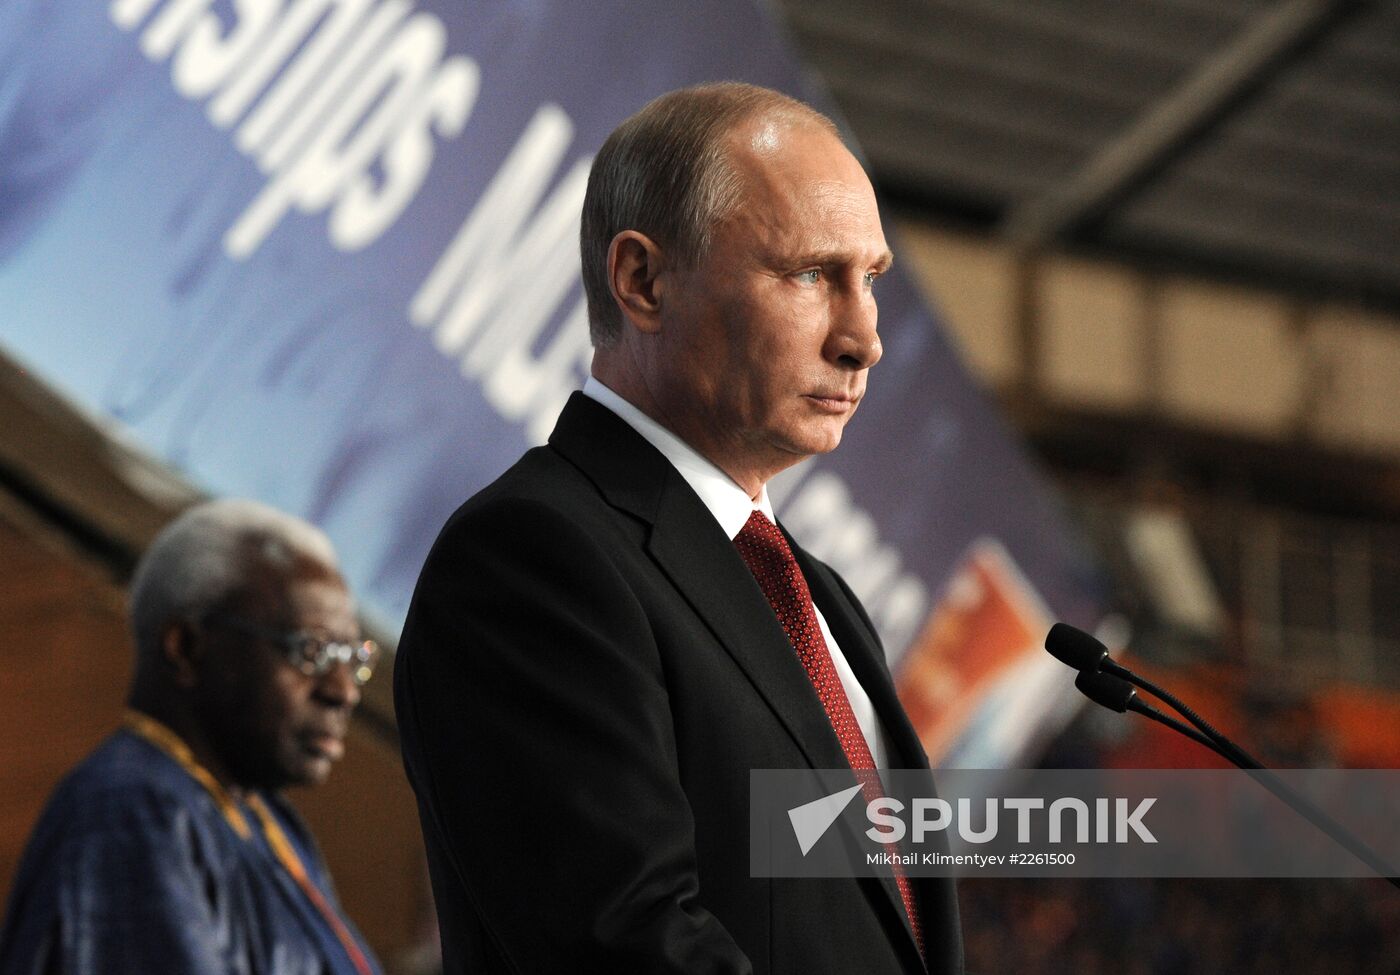 Vladimir Putin at 2013 World Championships in Athletics' opening